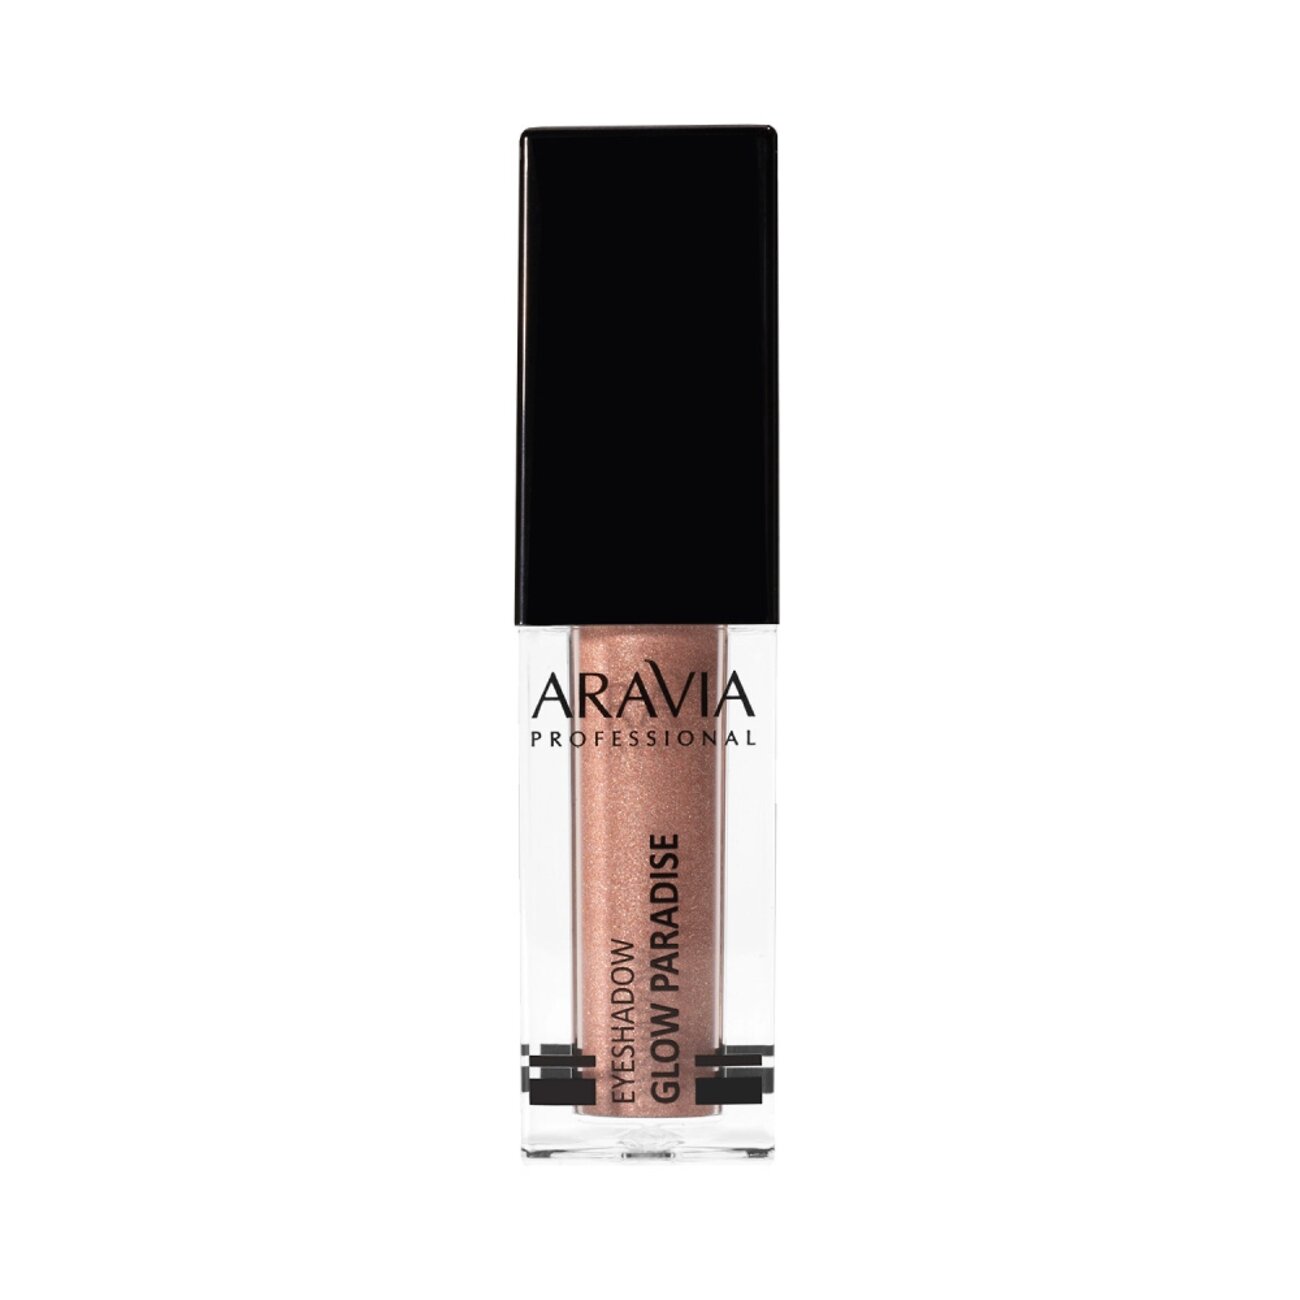 орг 15% ARAVIA Professional Aravia Professional Жидкие сияющие тени для век glow paradise, 5 мл – 03 rosy bronze